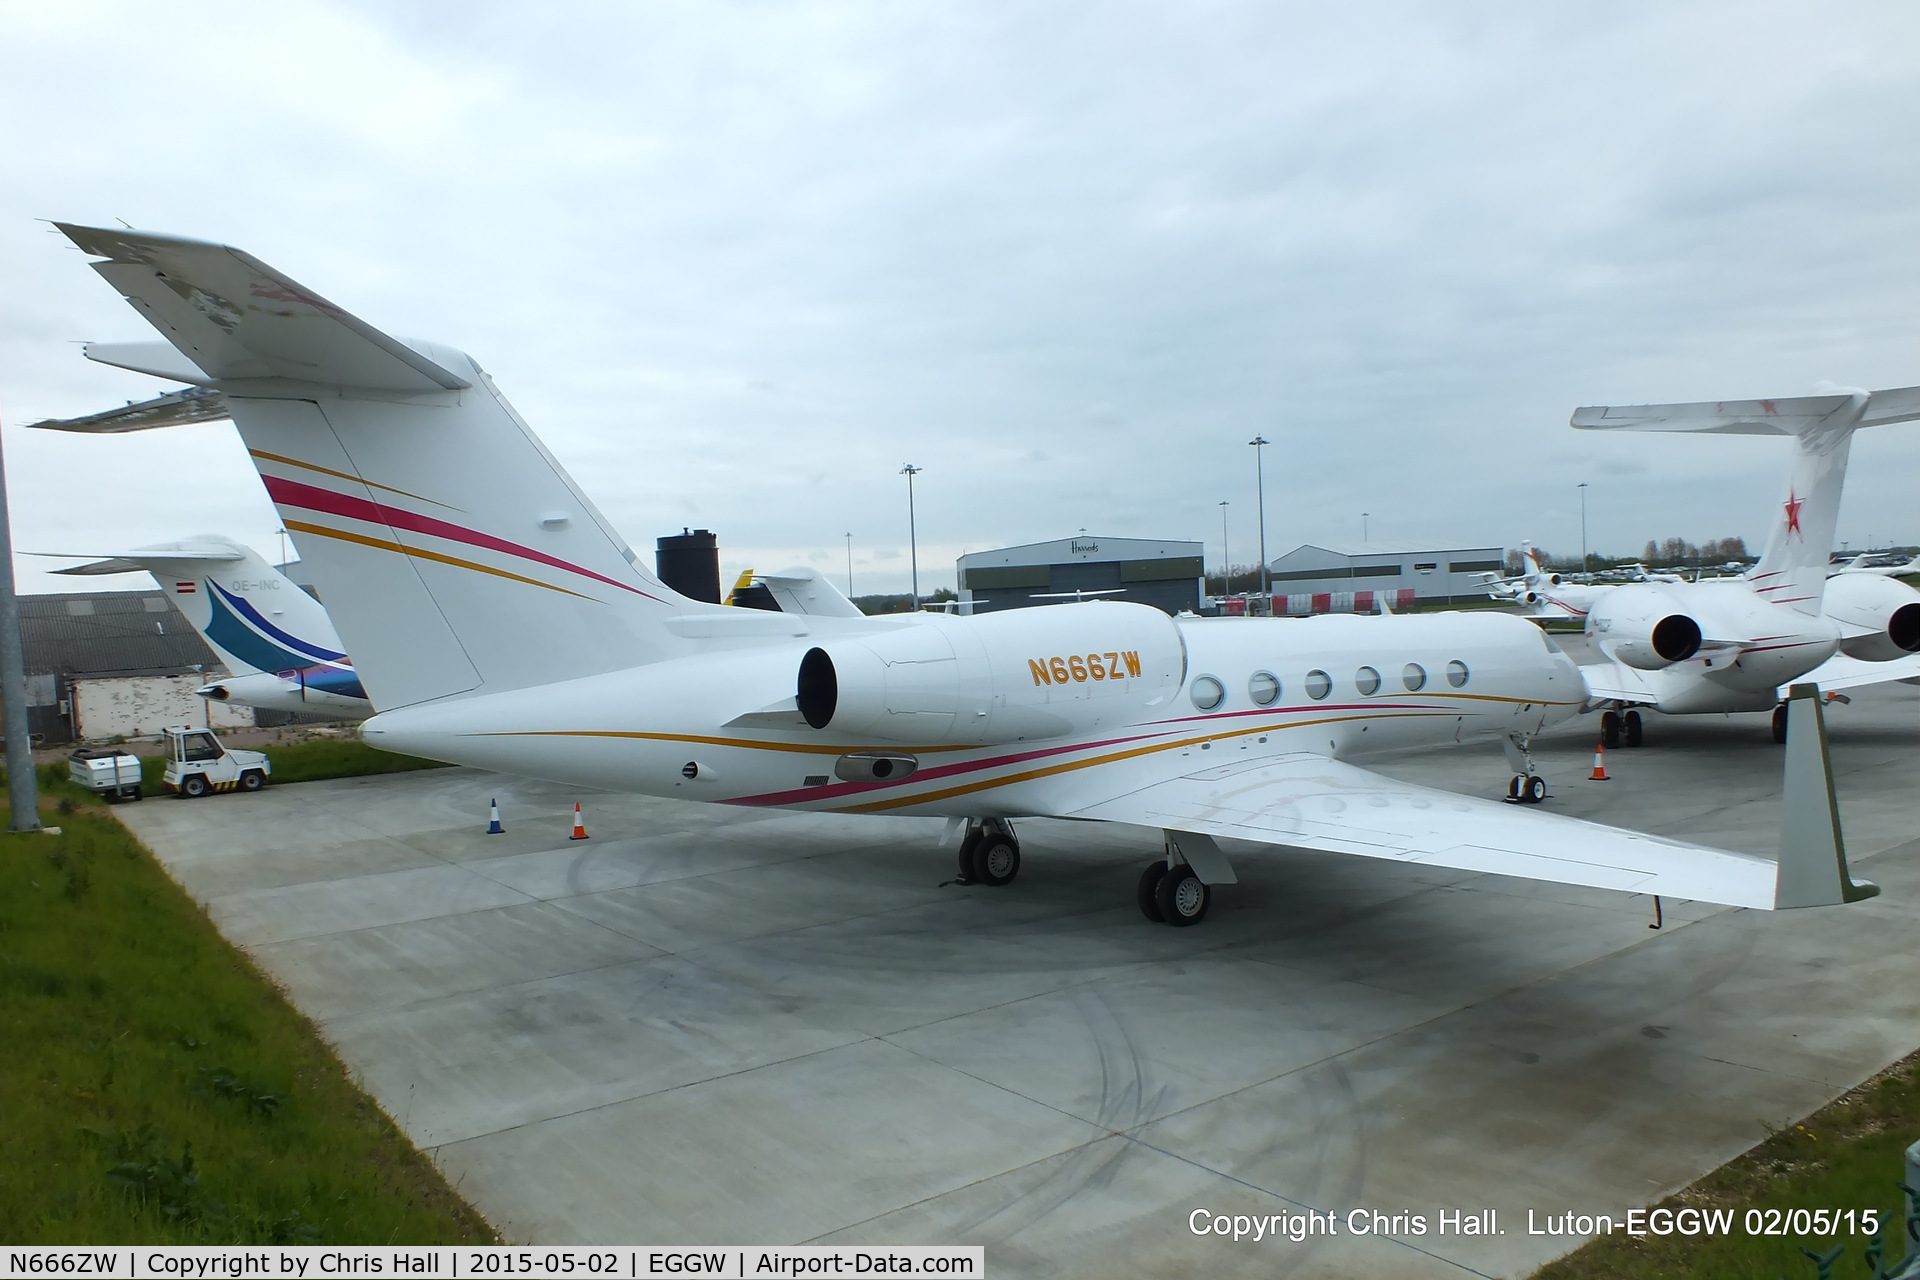 N666ZW, 2014 Gulfstream Aerospace GIV-X (G450) C/N 4311, parked at Luton